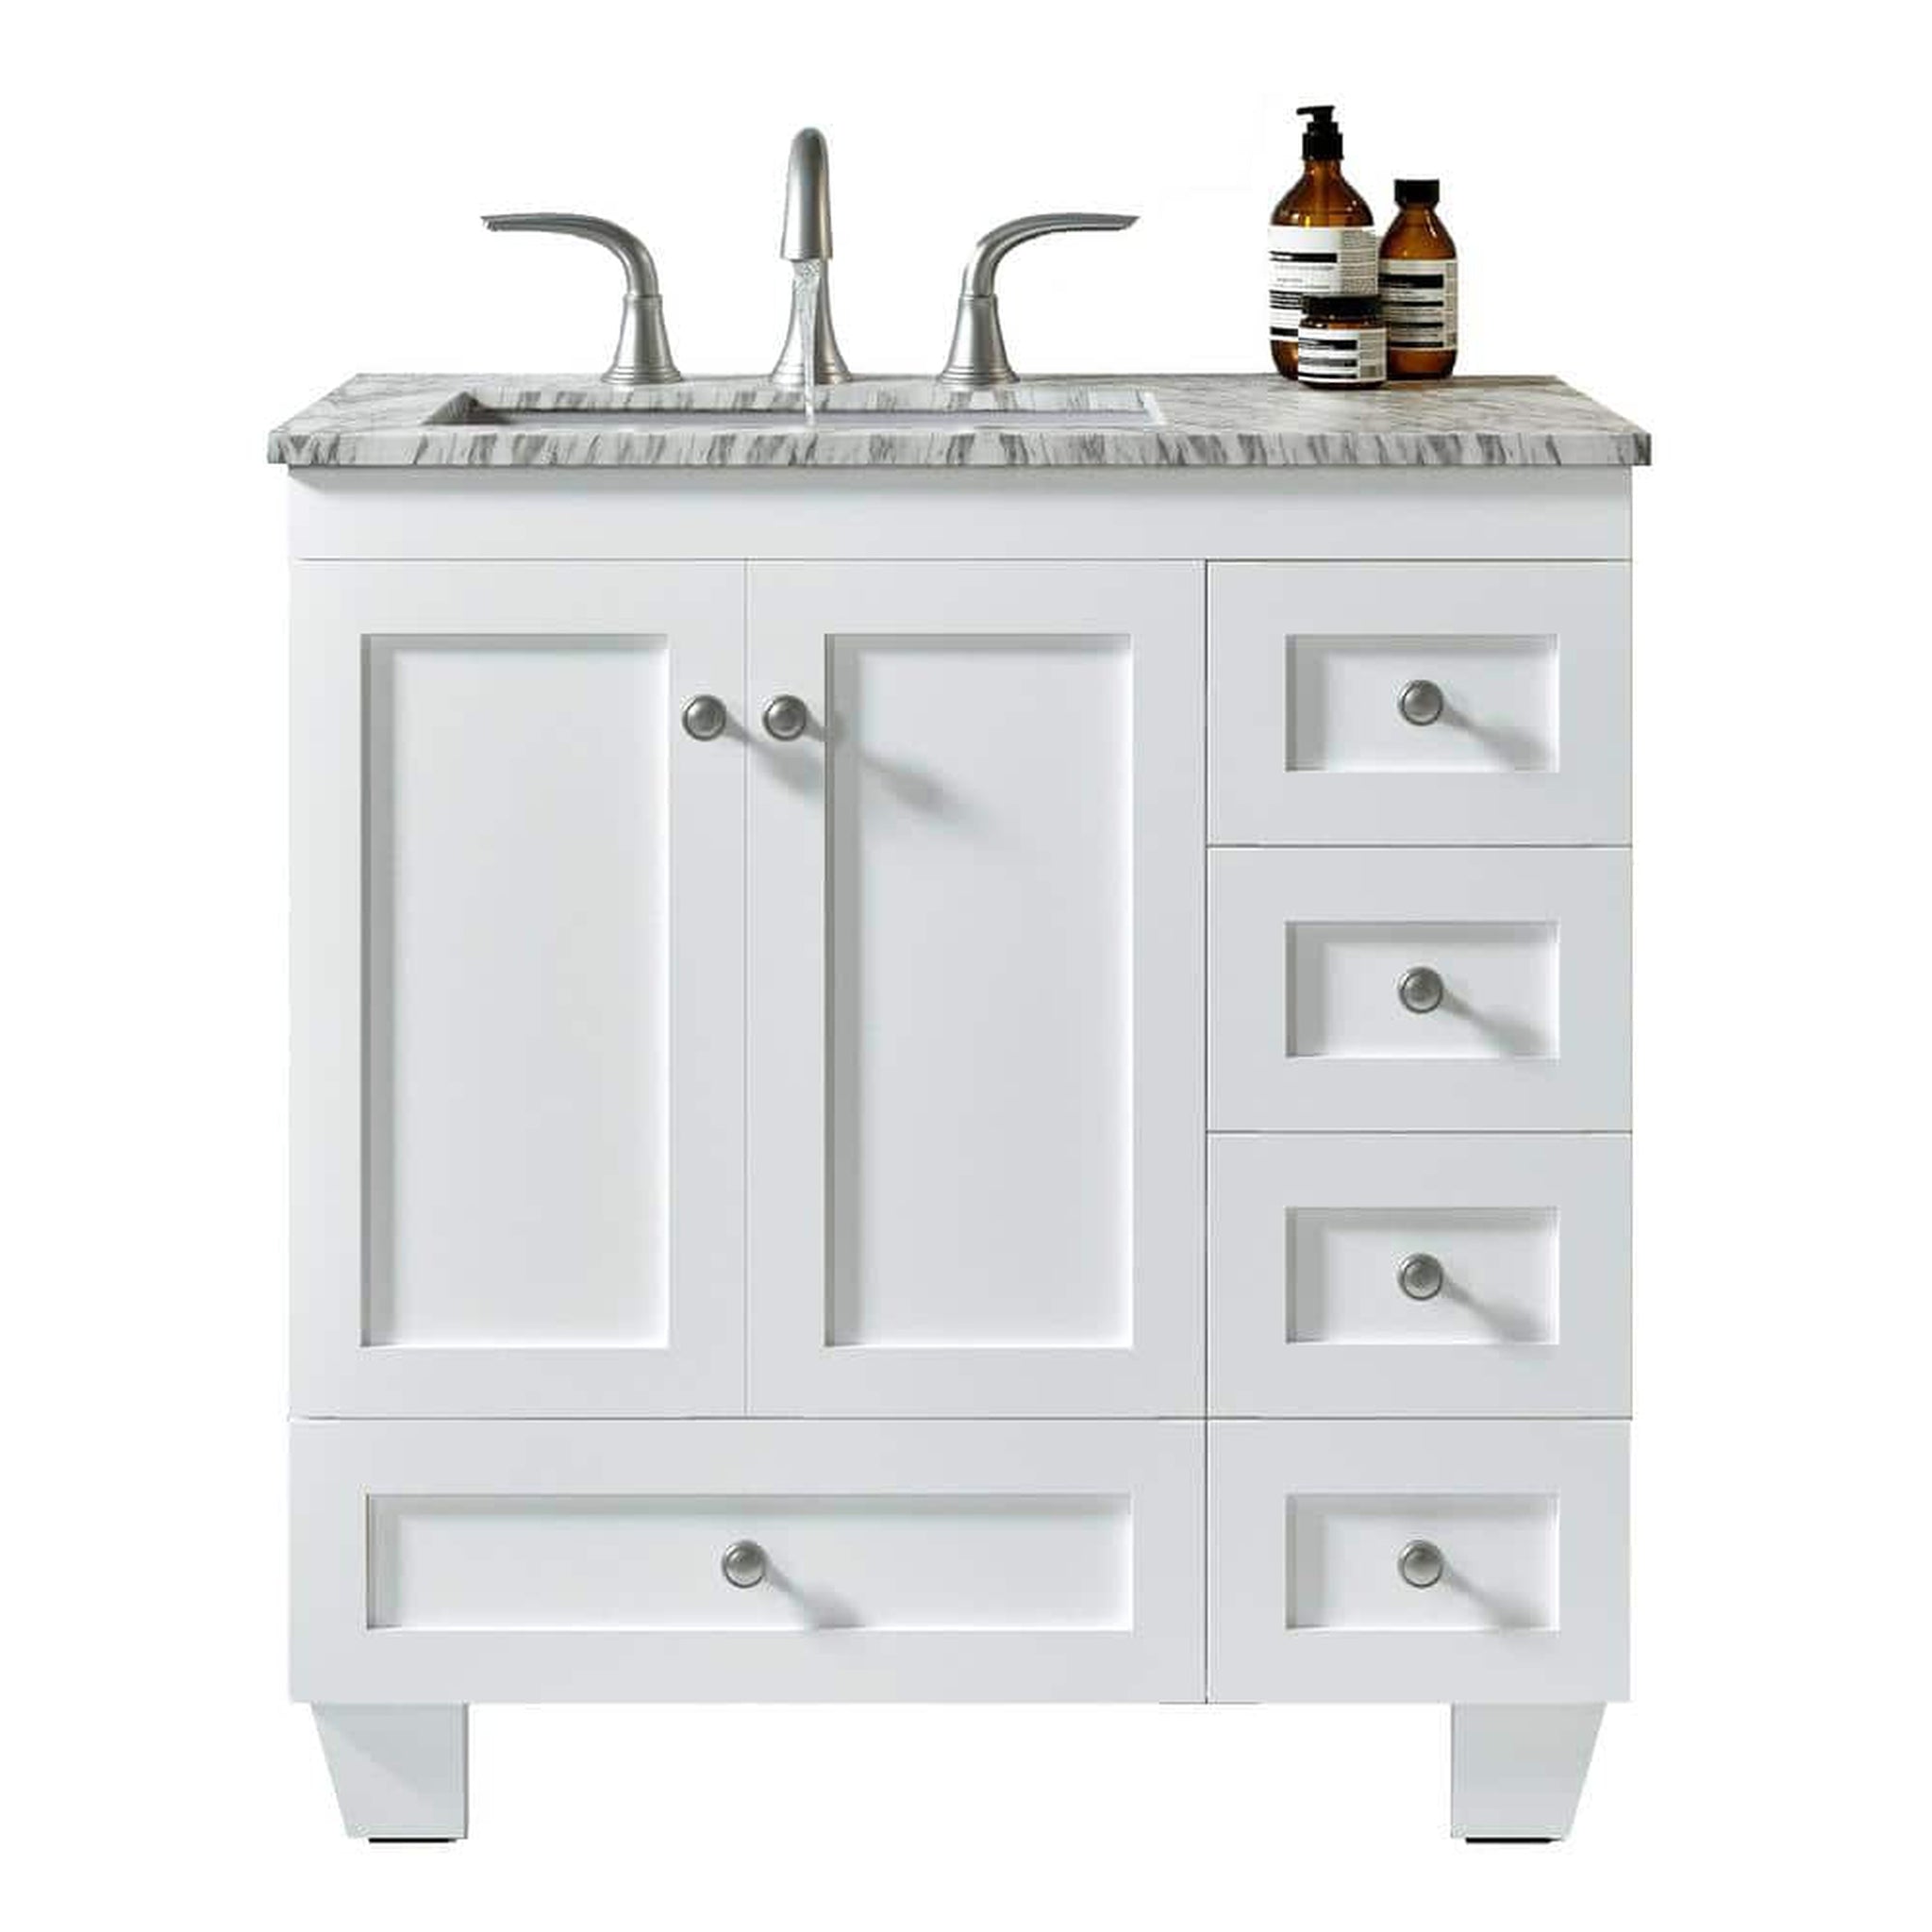 Eviva, Eviva Acclaim 30" x 34" Freestanding White Bathroom Vanity With White Carrara Marble Countertop and Single Undermount Sink